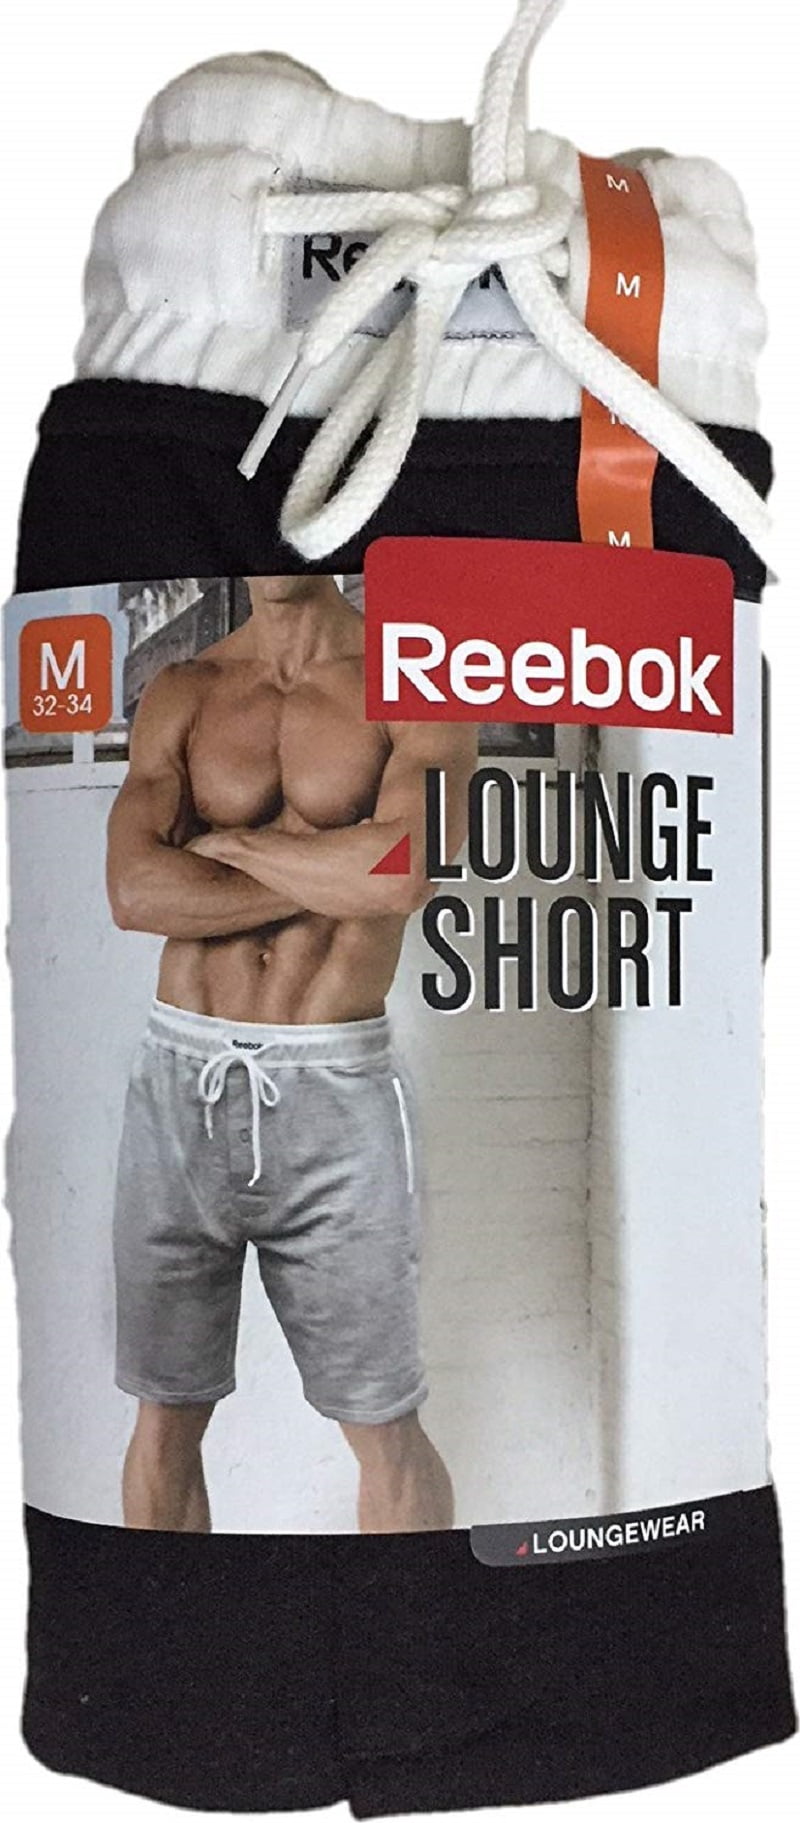 reebok lounge shorts